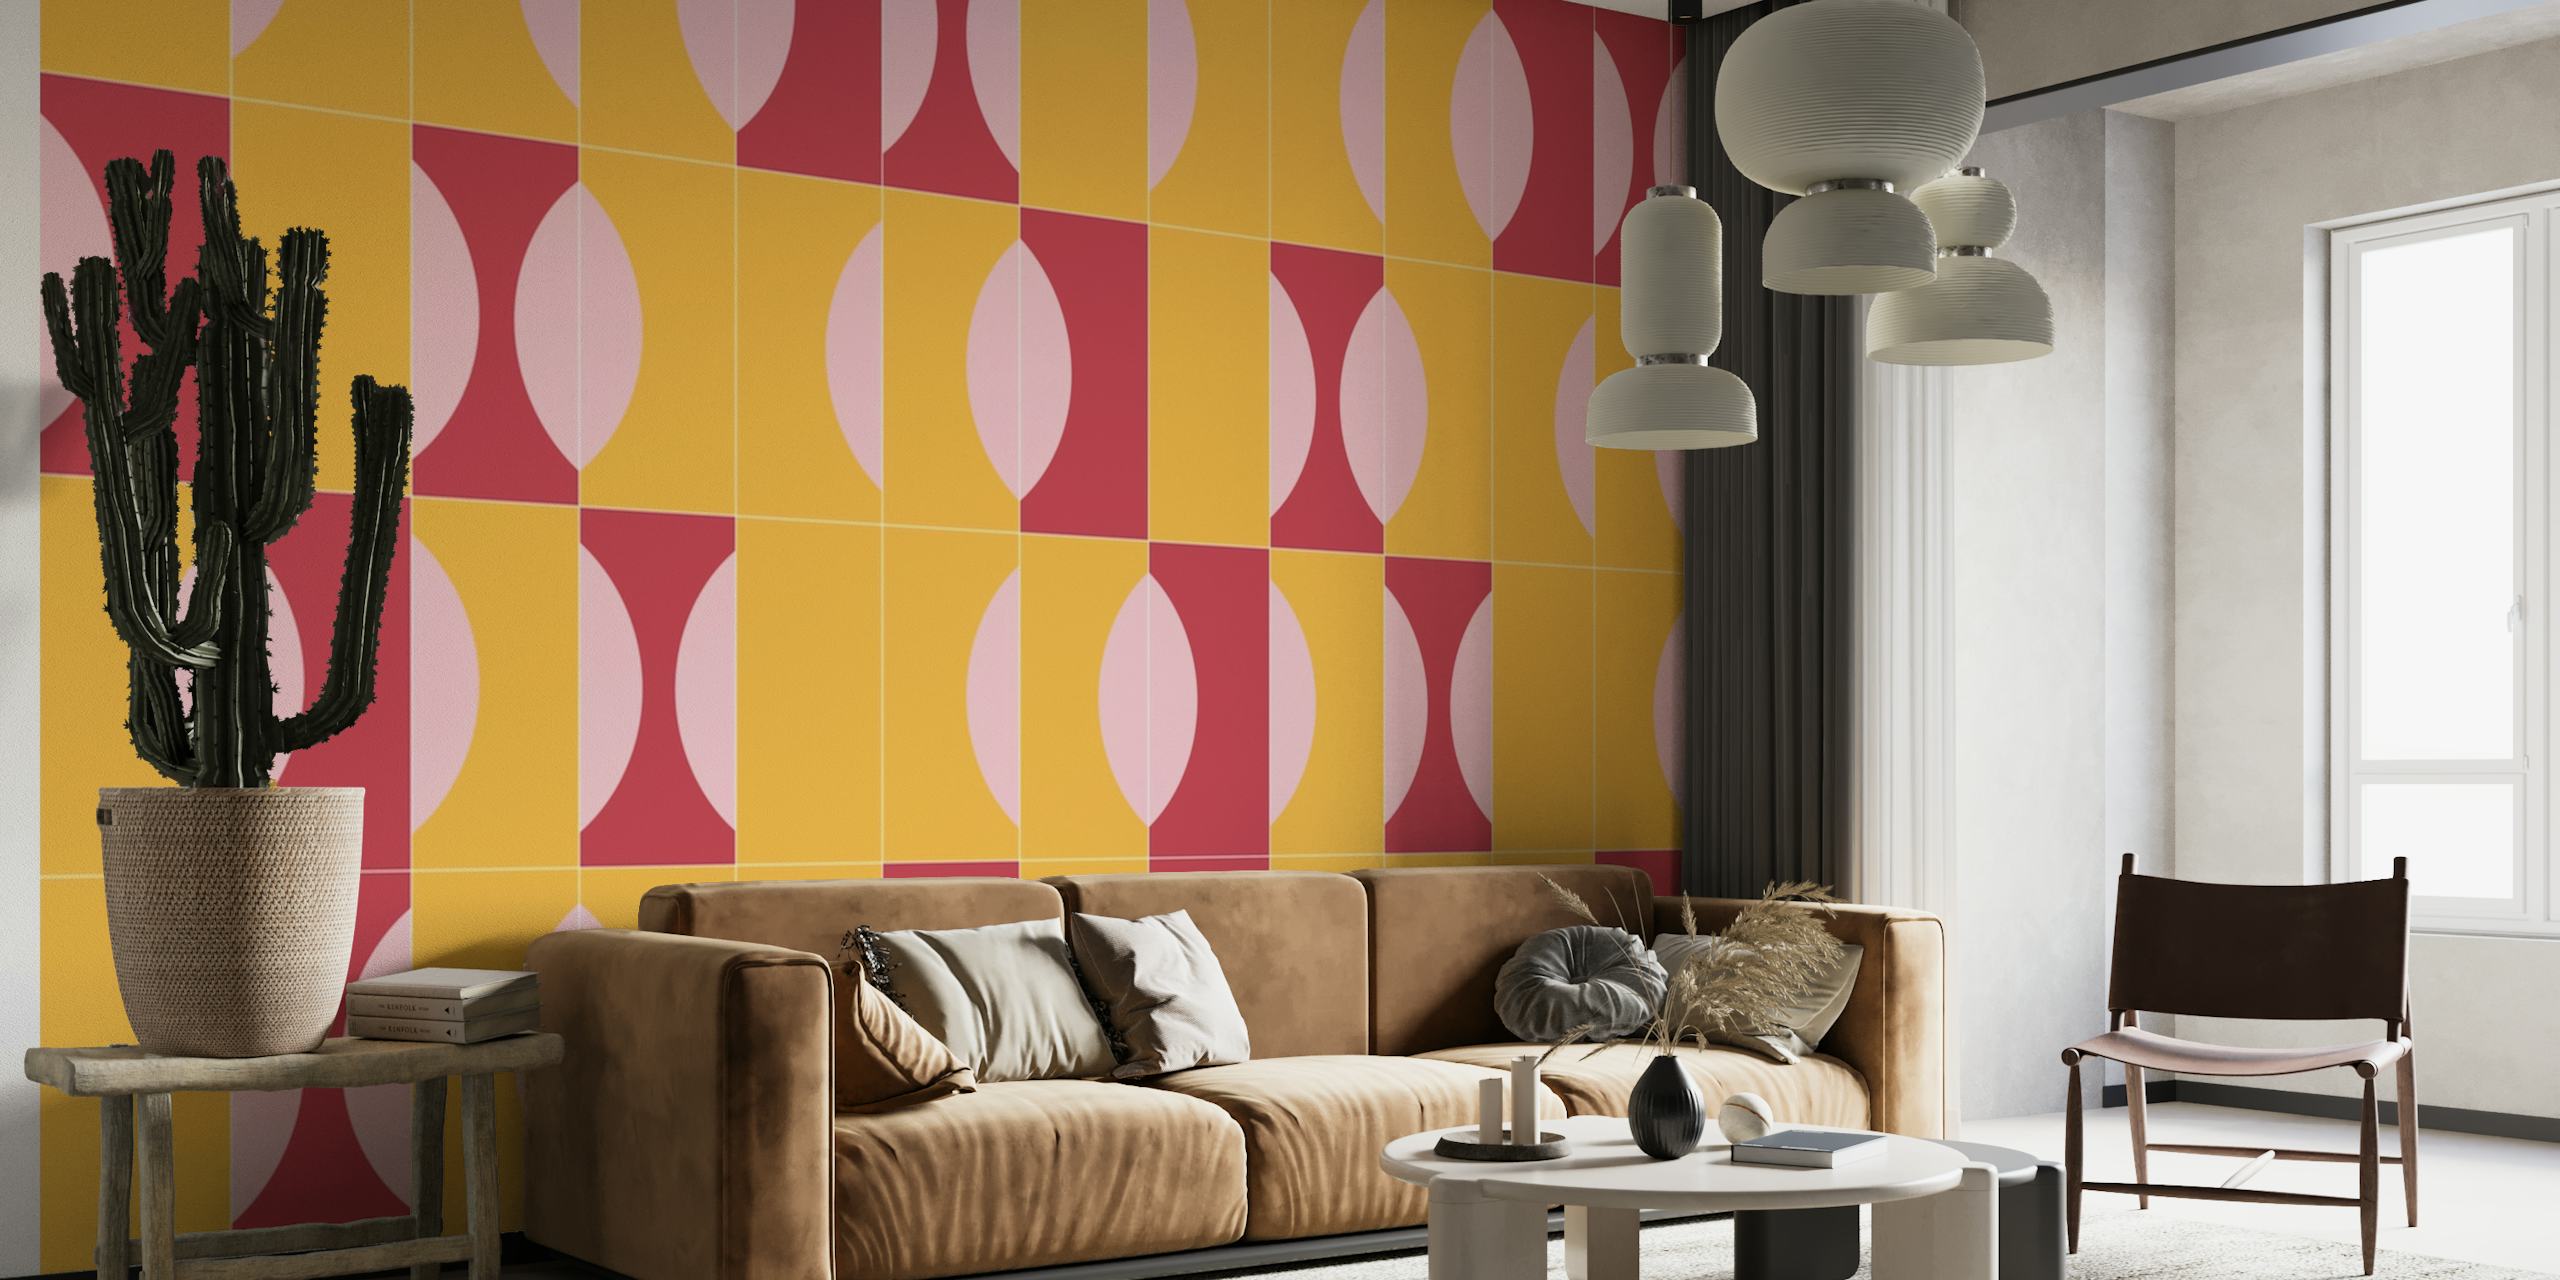 Mural abstrato Sunny Tiles 03 com formas geométricas em tons de laranja, rosa e lavanda